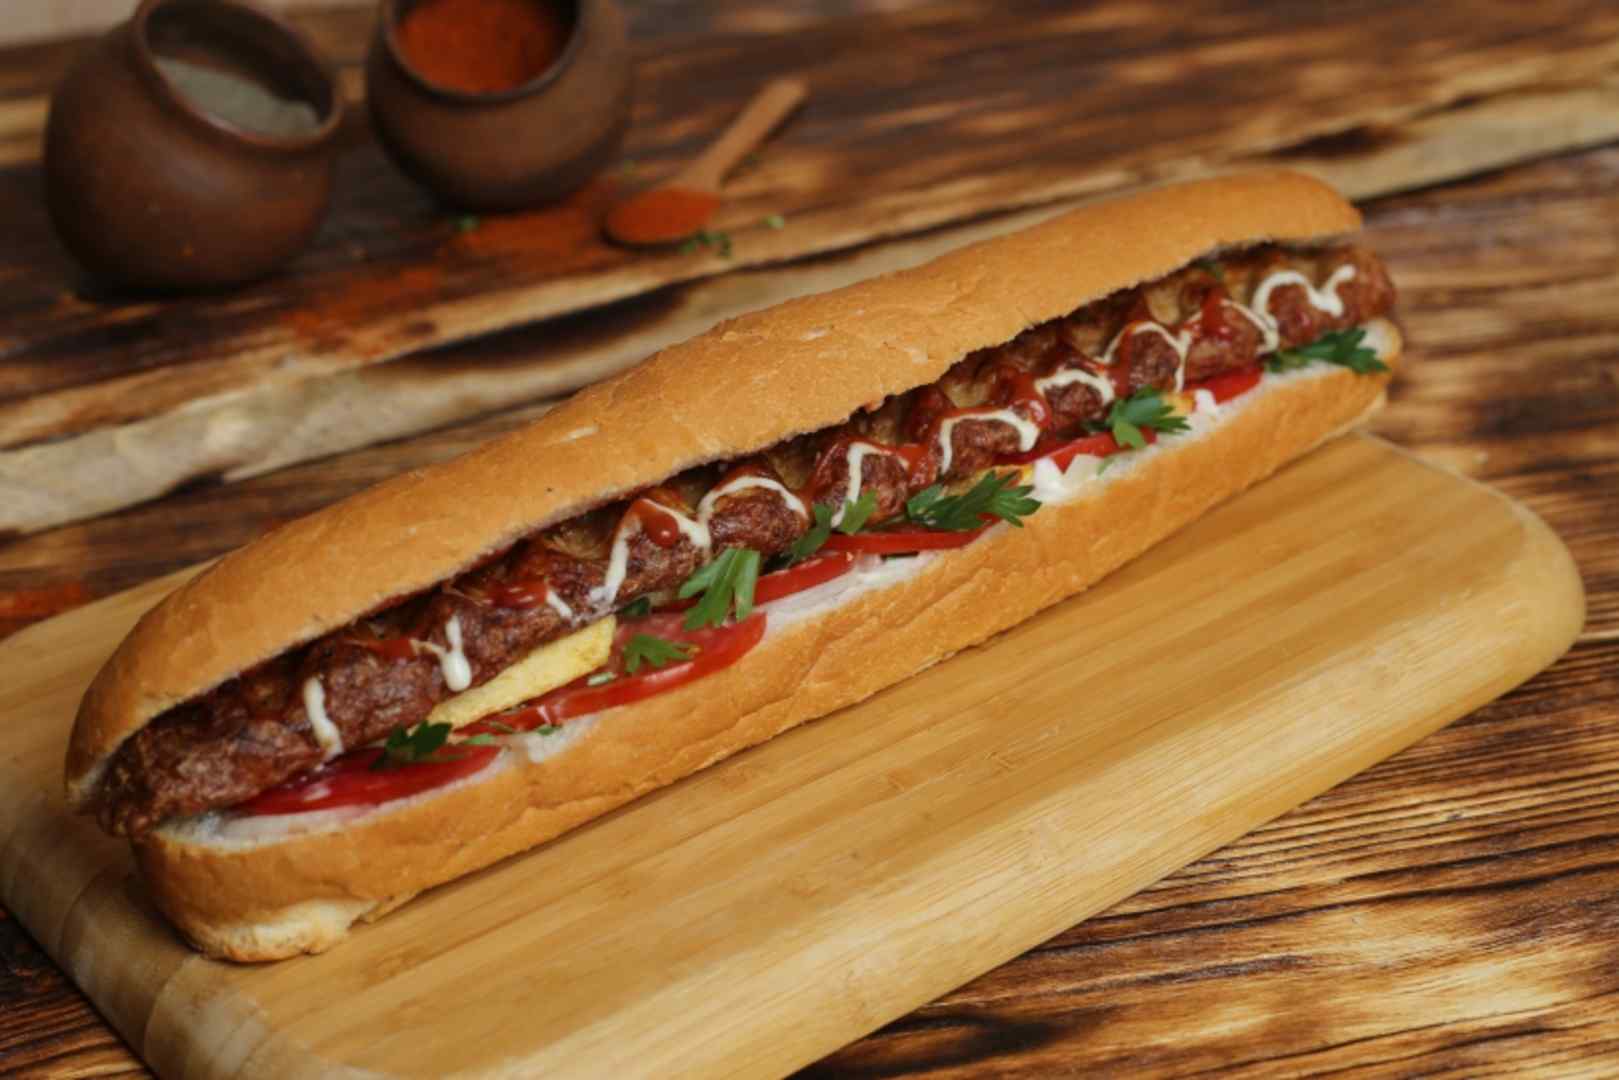 Extra kebab "Karas"